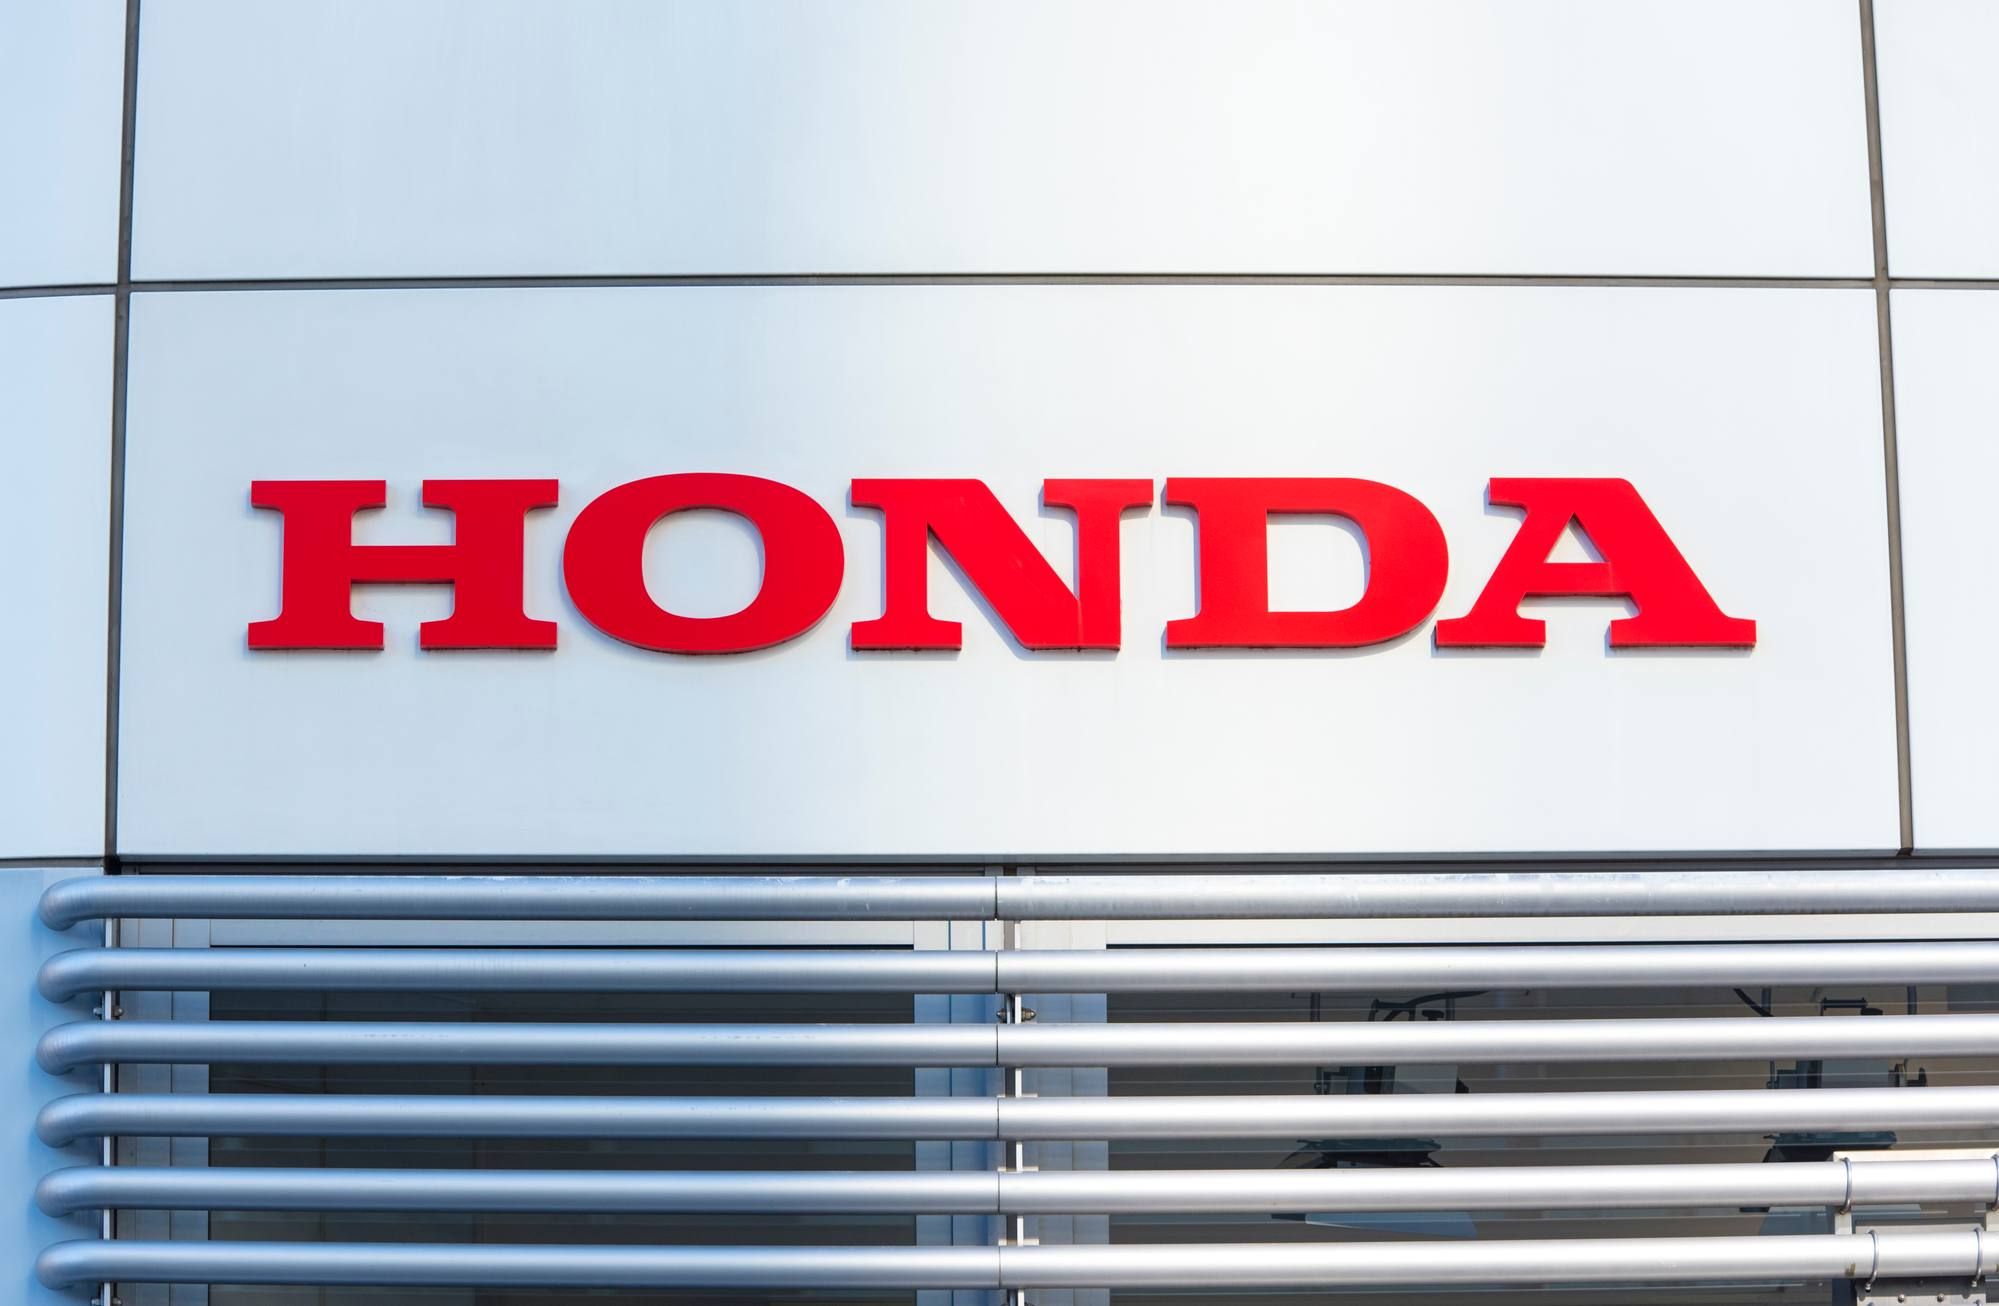 Honda transmission class action settled.